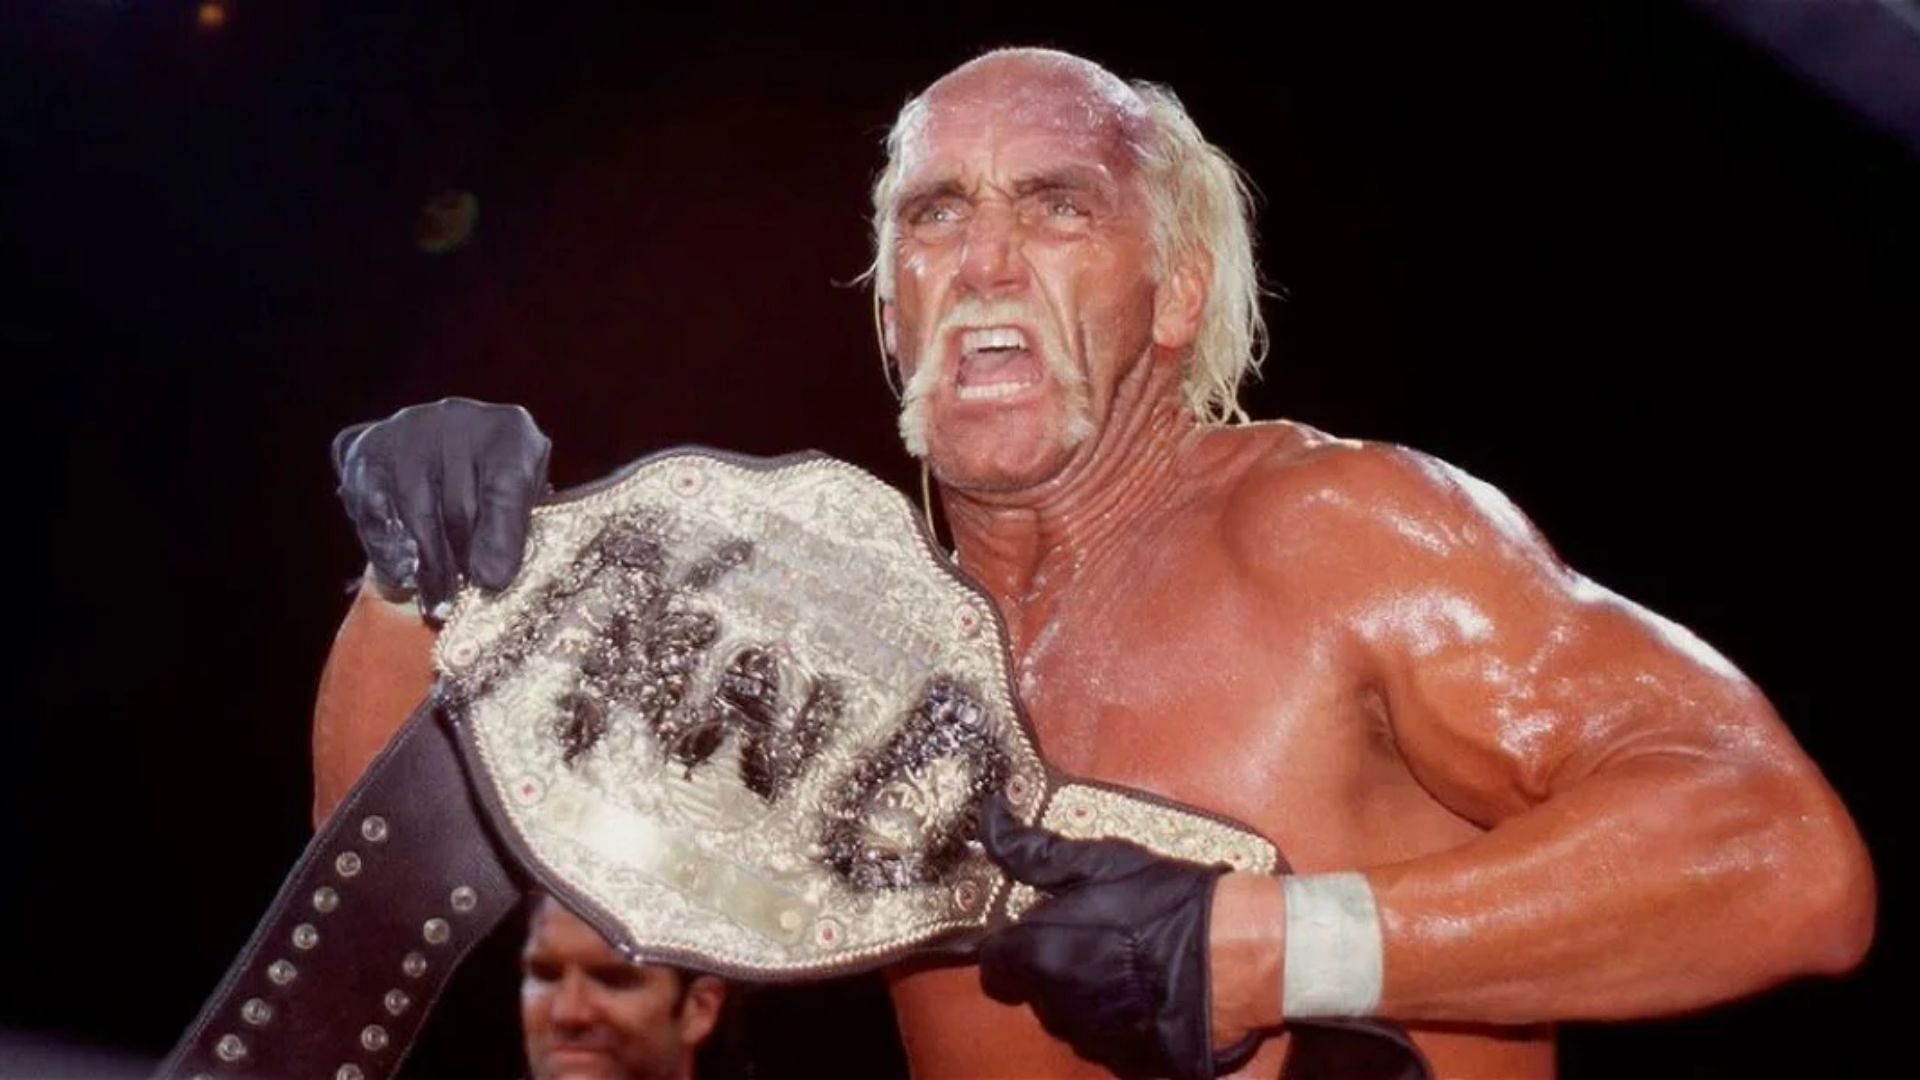 Two-time WWE Hall of Famer Hulk Hogan